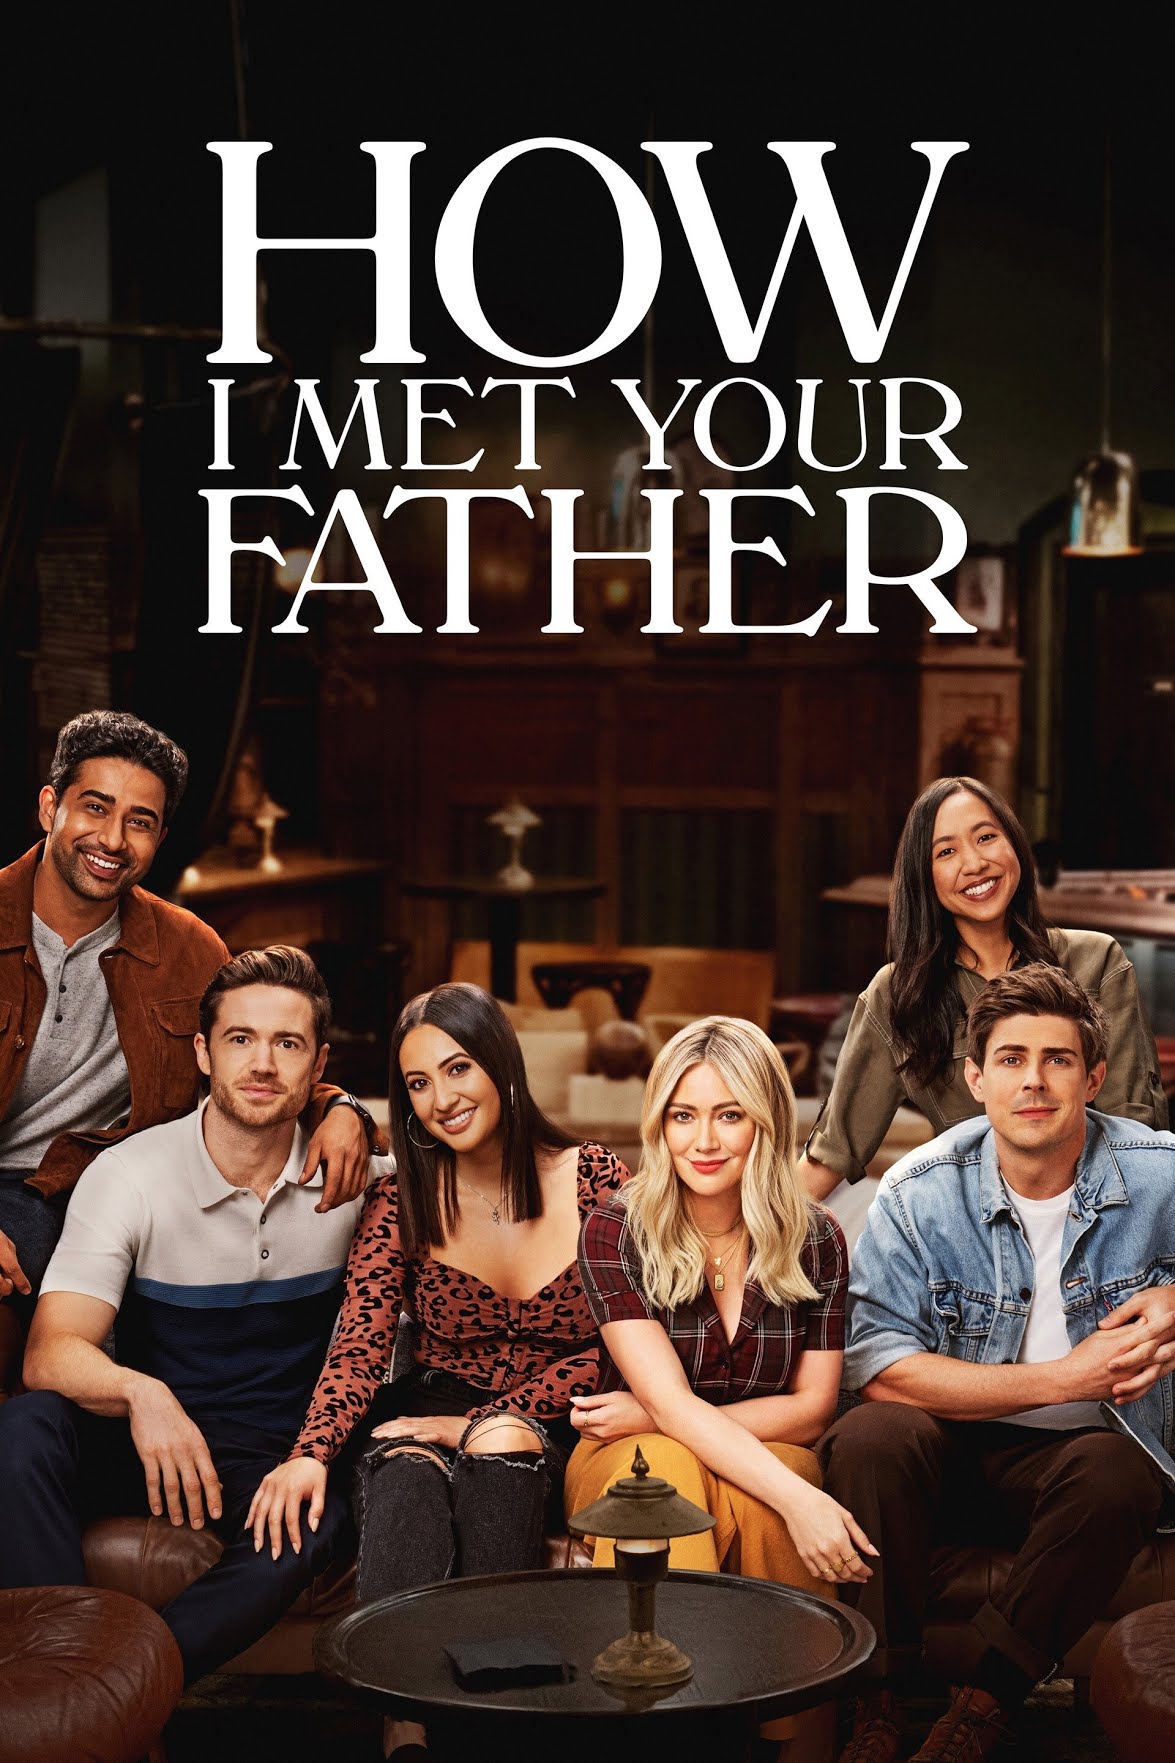 El 9 de marzo llega a latinoamérica “How i met your father”, la nueva comedia exclusiva de Star+ protagonizada por Hilary Duff